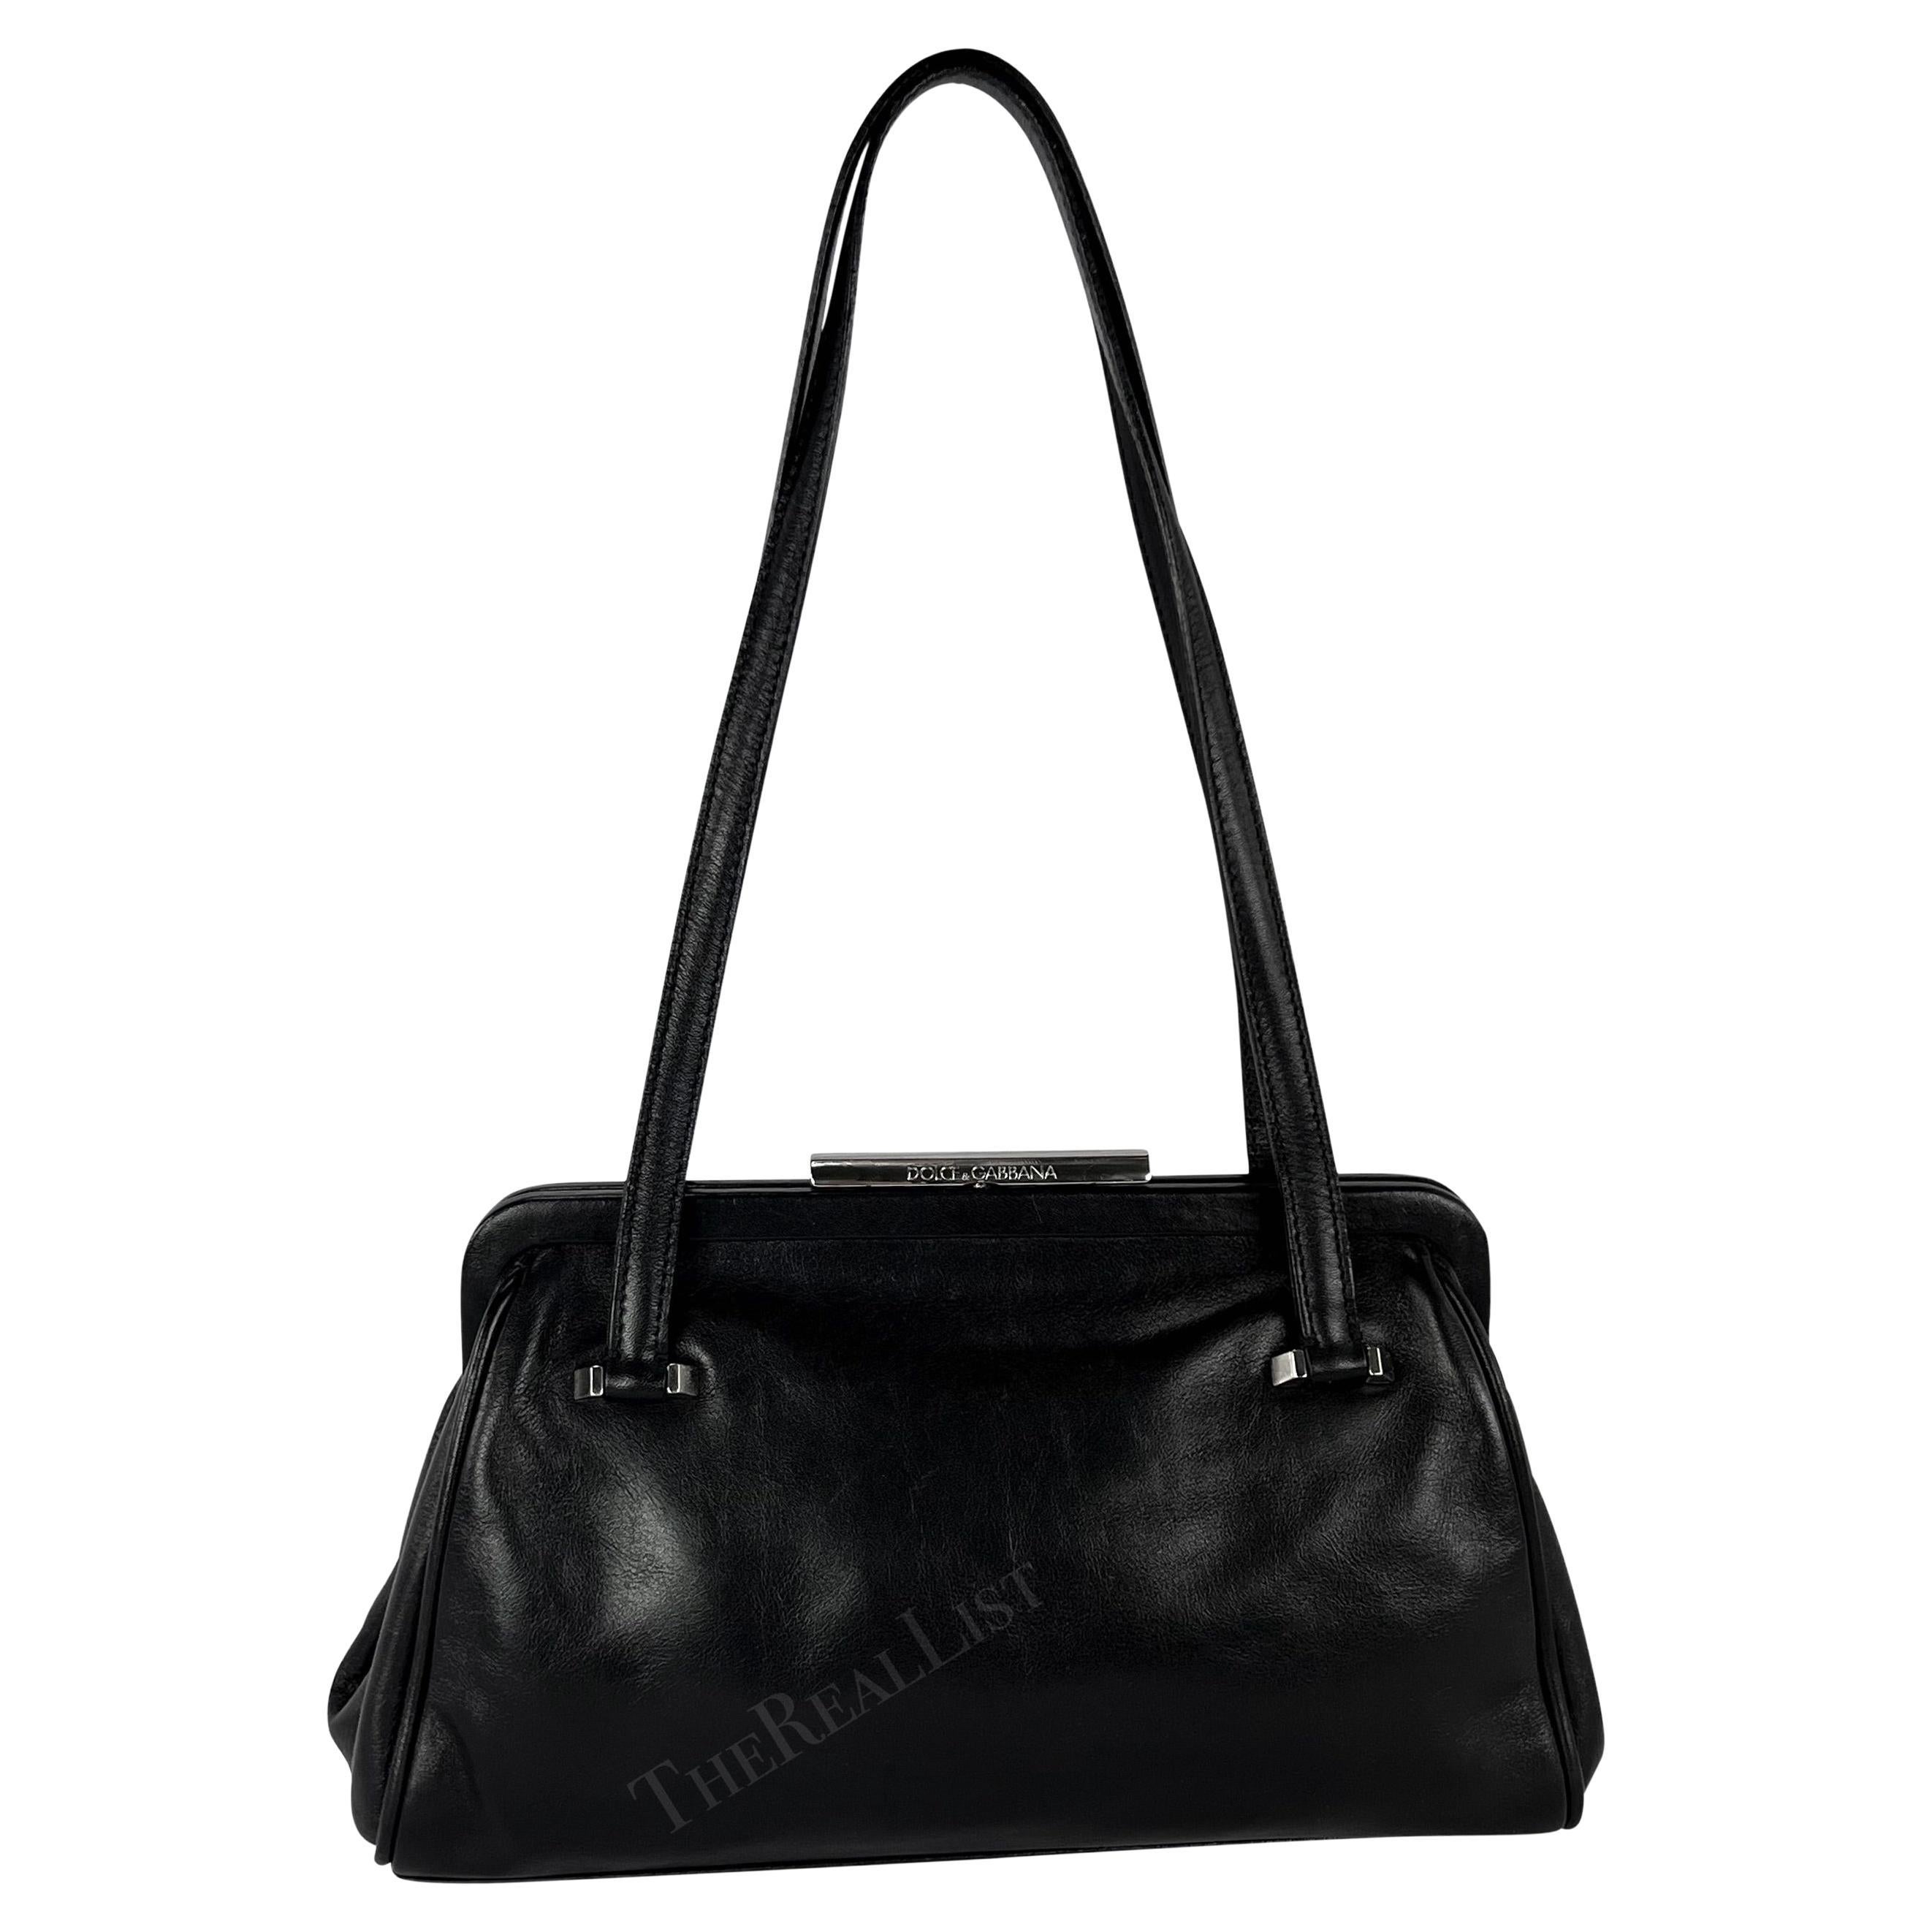 S/S 2003 Dolce & Gabbana 'Sex & Love' Black Leather Mini Shoulder Bag For Sale 6